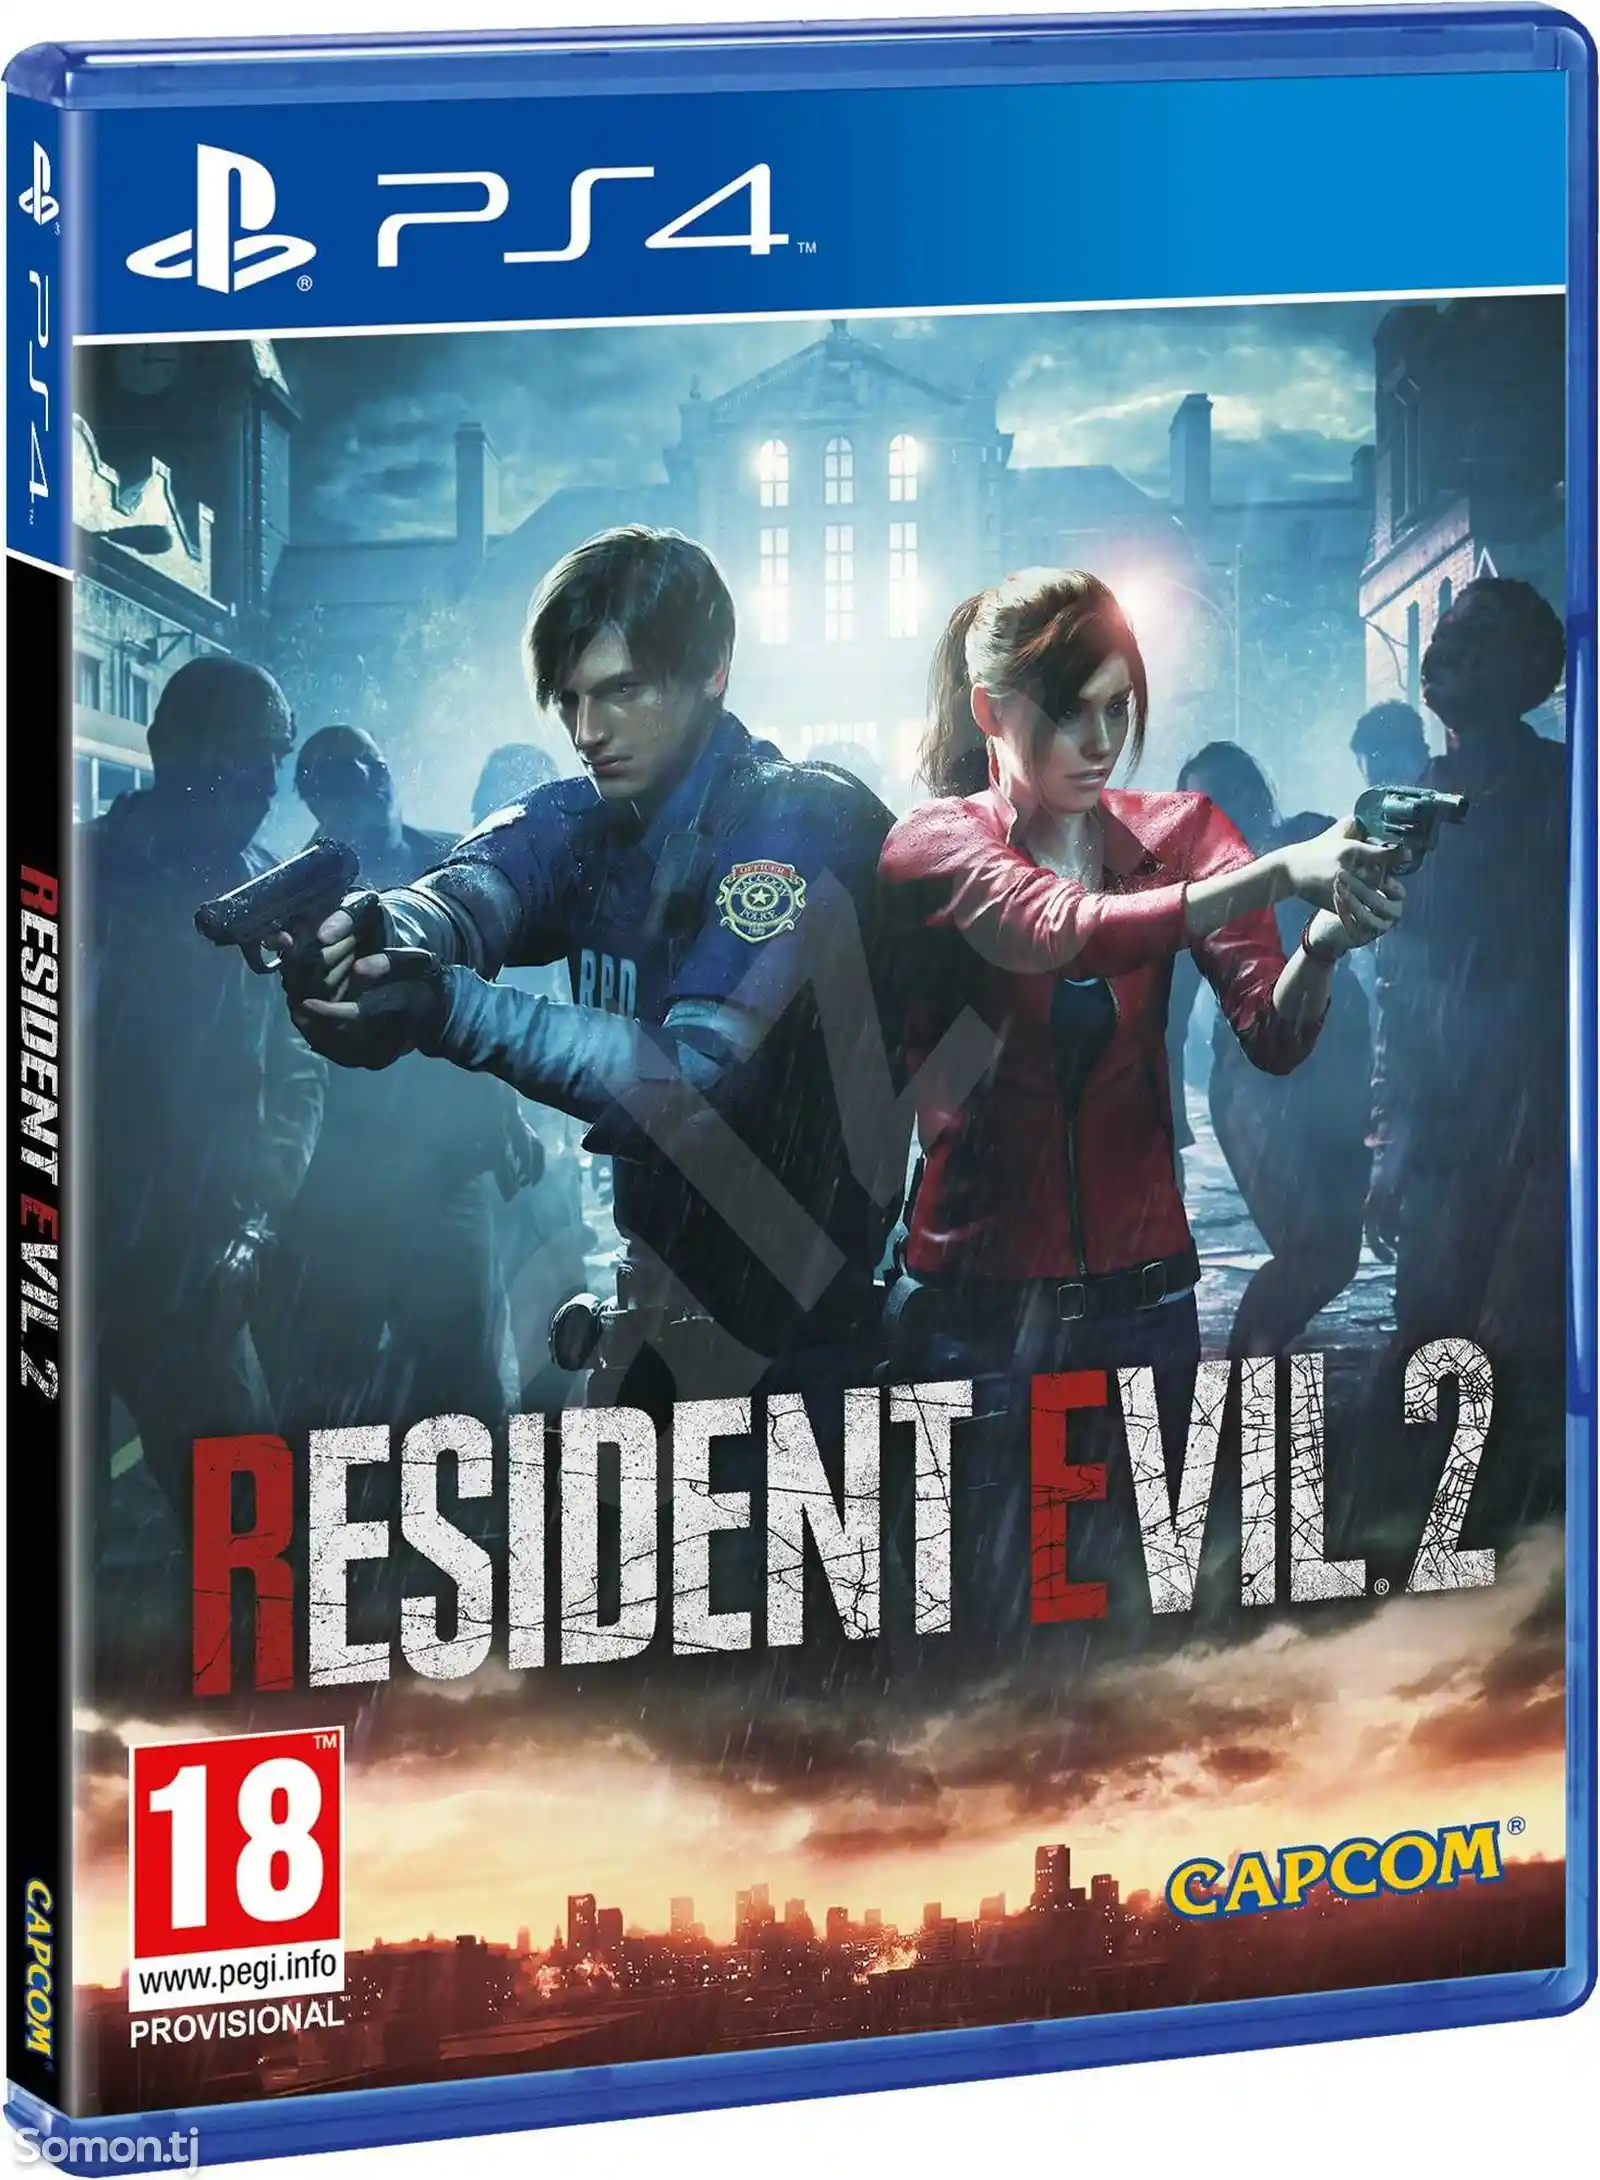 Игра Resident evil 2 для PS-4 / 5.05 / 6.72 / 7.02 / 7.55 / 9.00 /-1